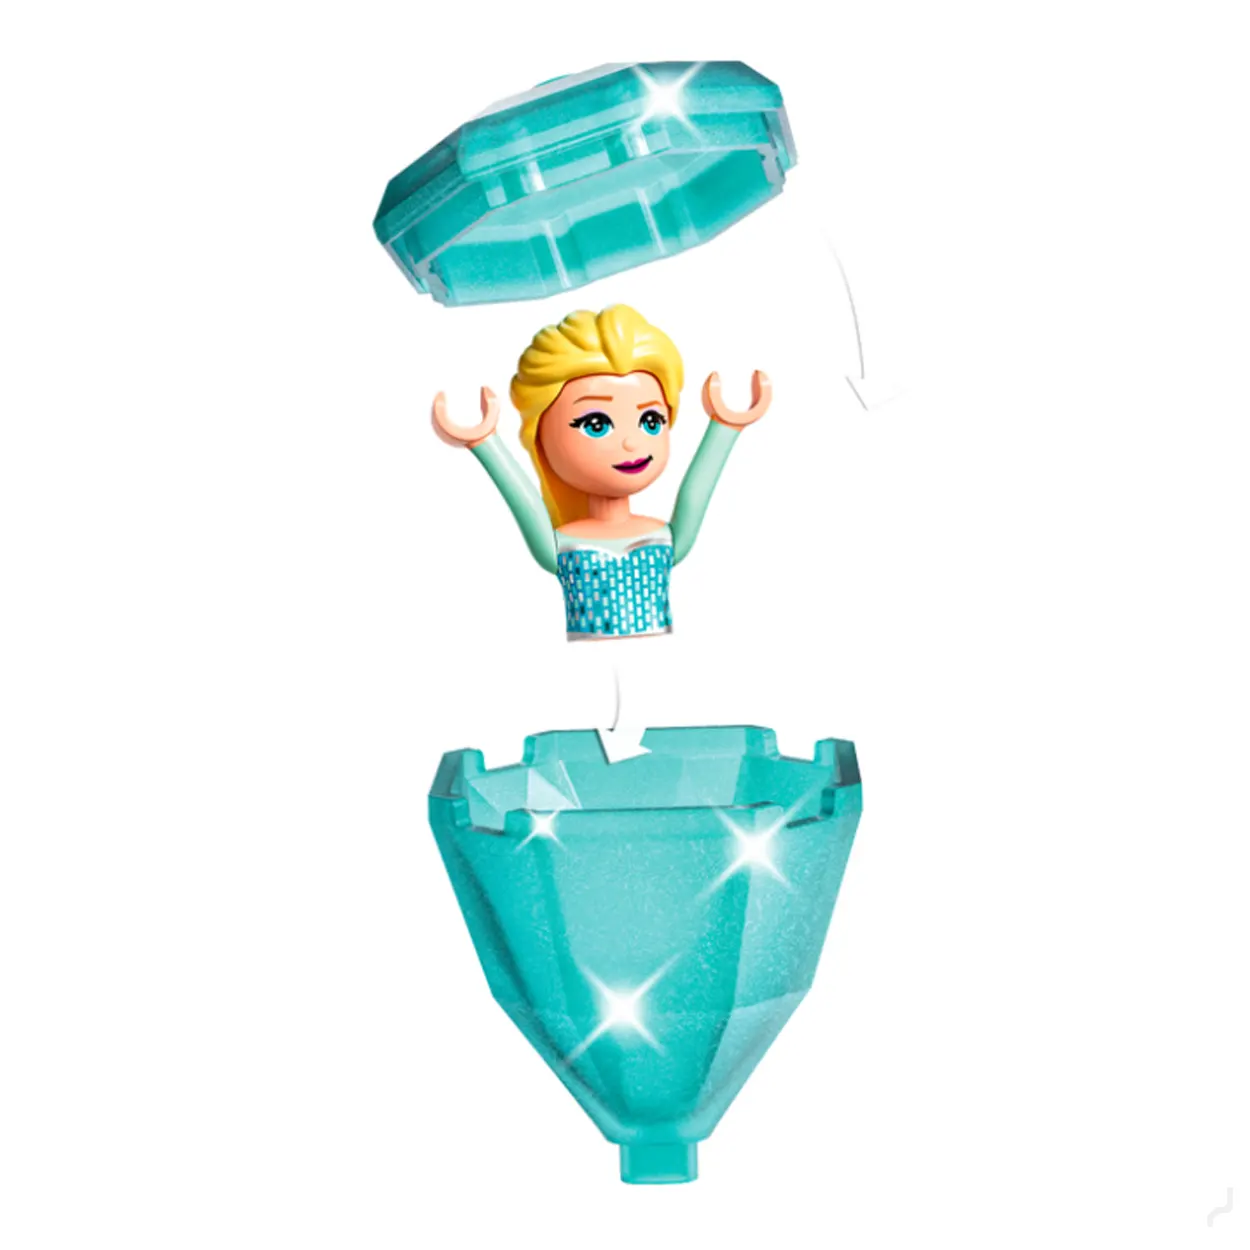 LEGO Disney Princess New Sets for Jan. 1st 2022 Revealed | Diamond dress, full of gimmicks, Dots collaboration, more